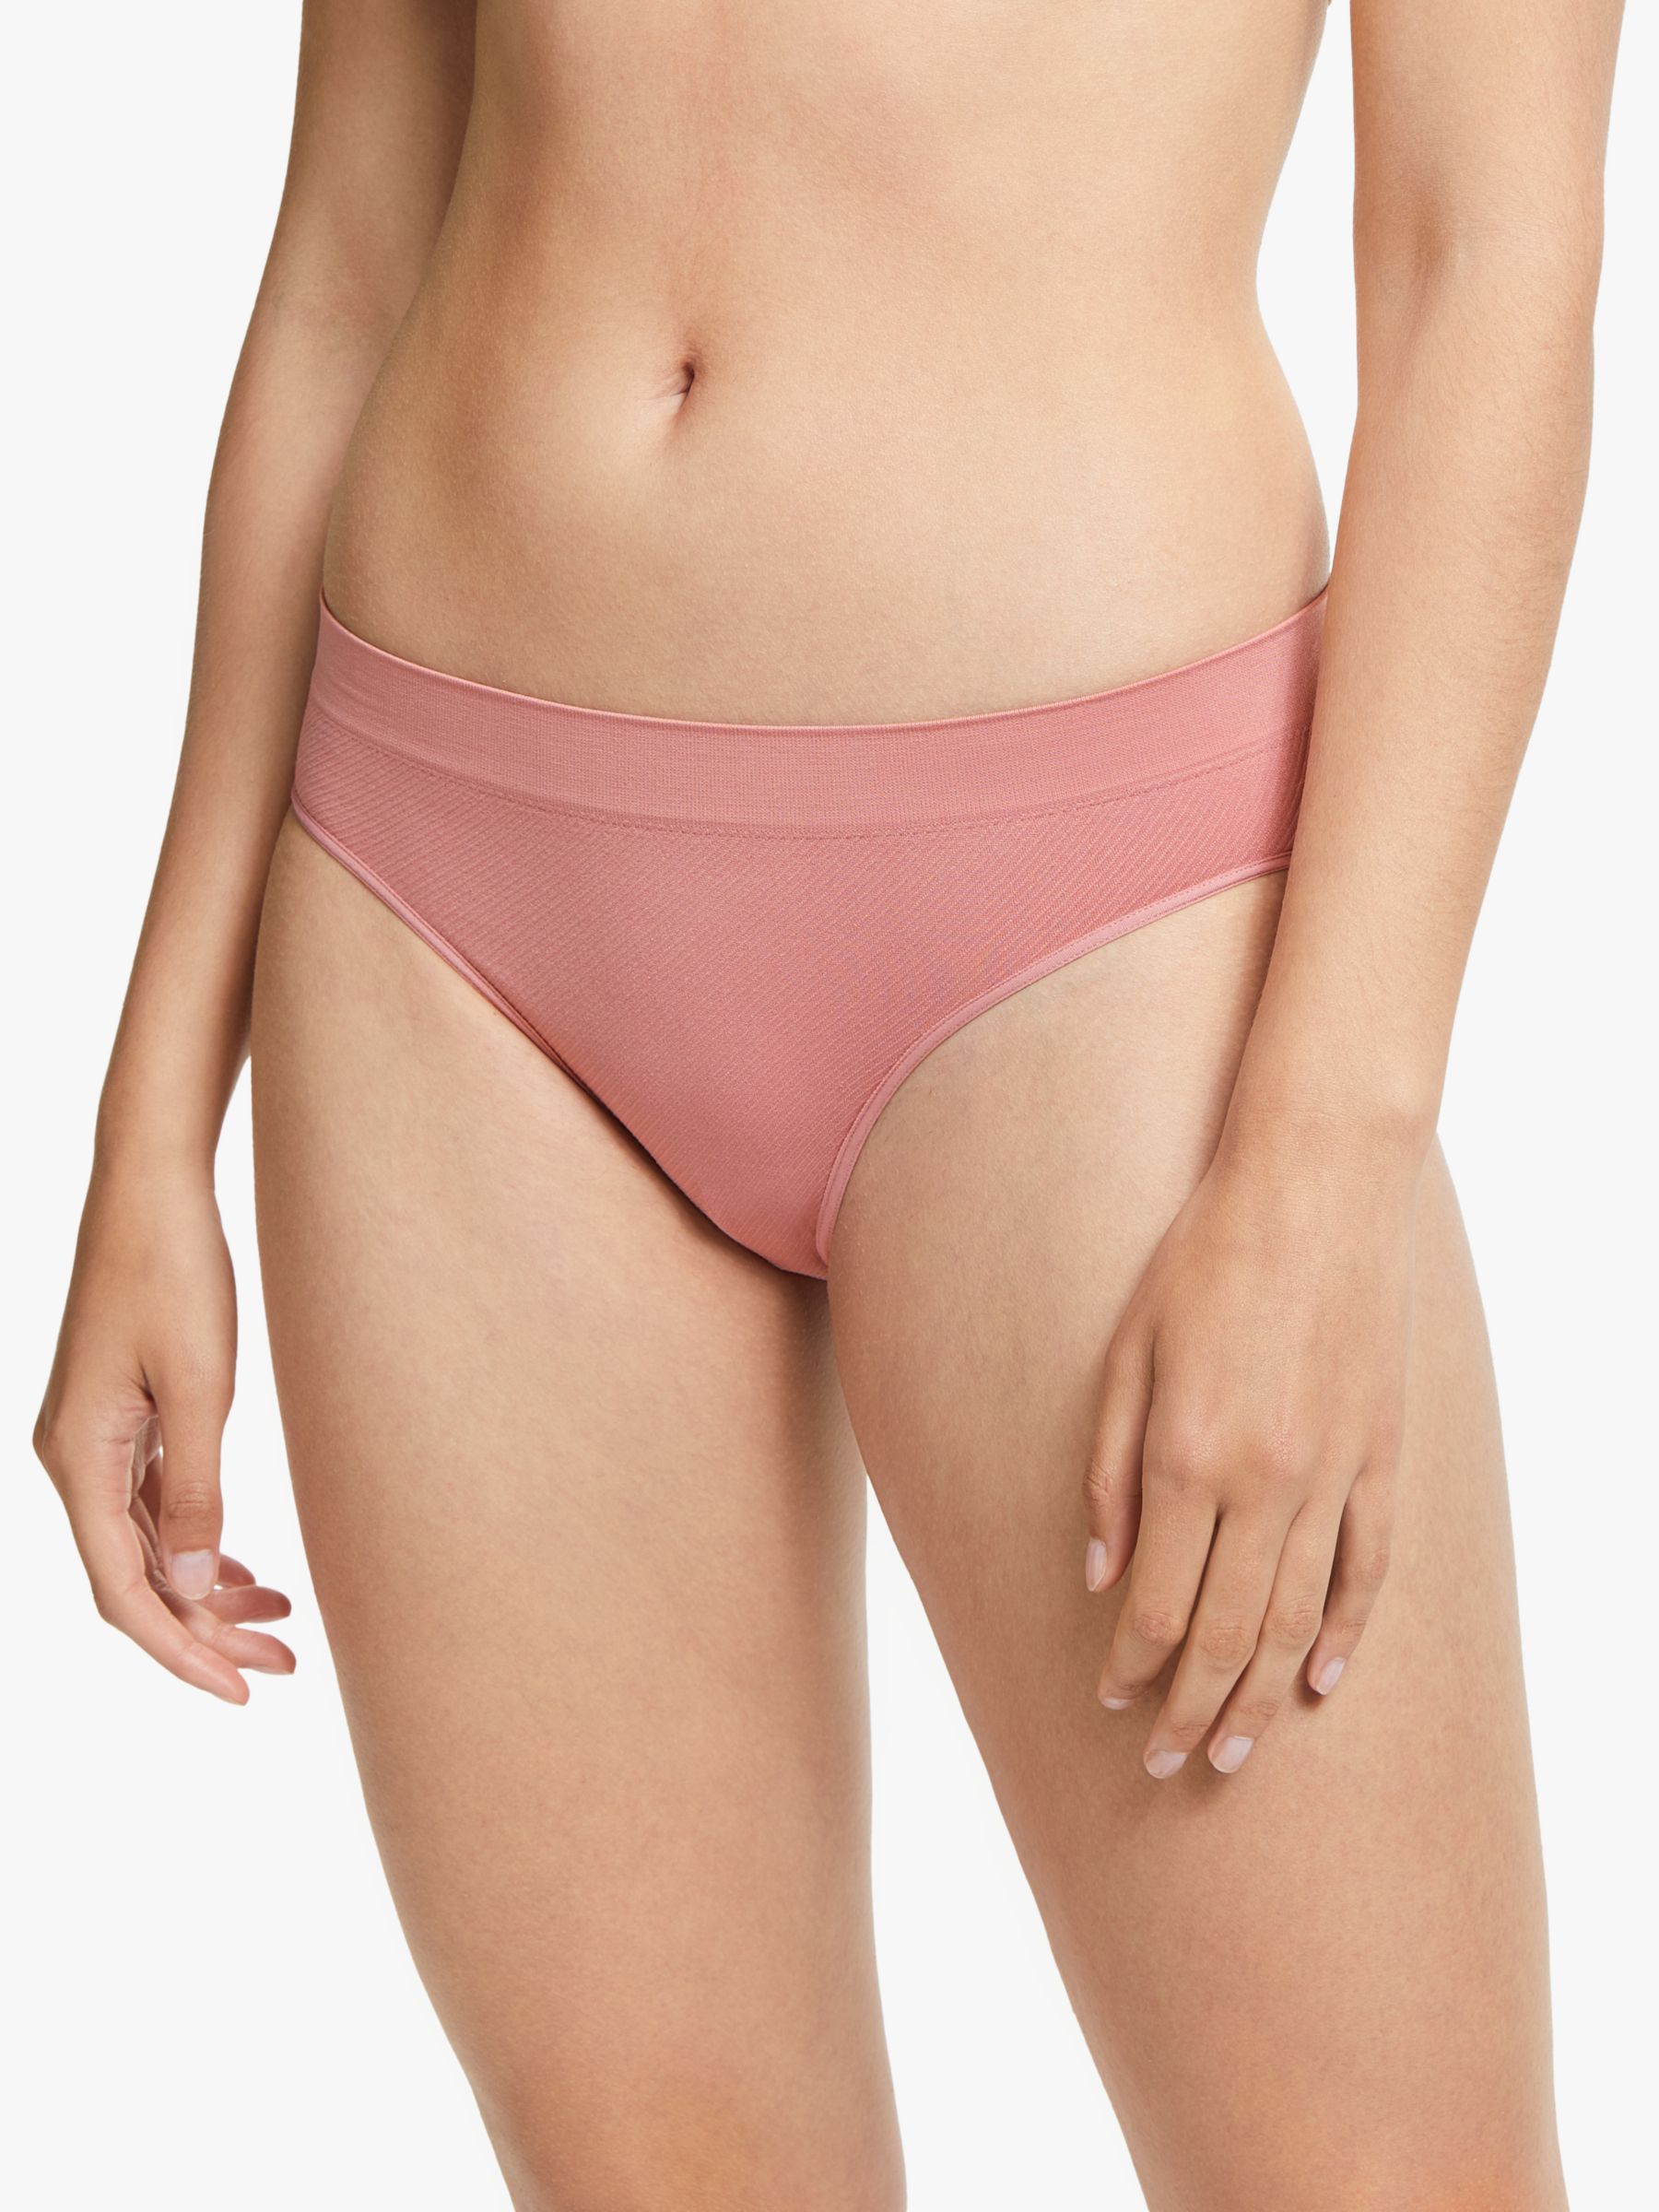 Jockey Women's Seamfree Air Bikini Underwear, Cream Blush, 7 